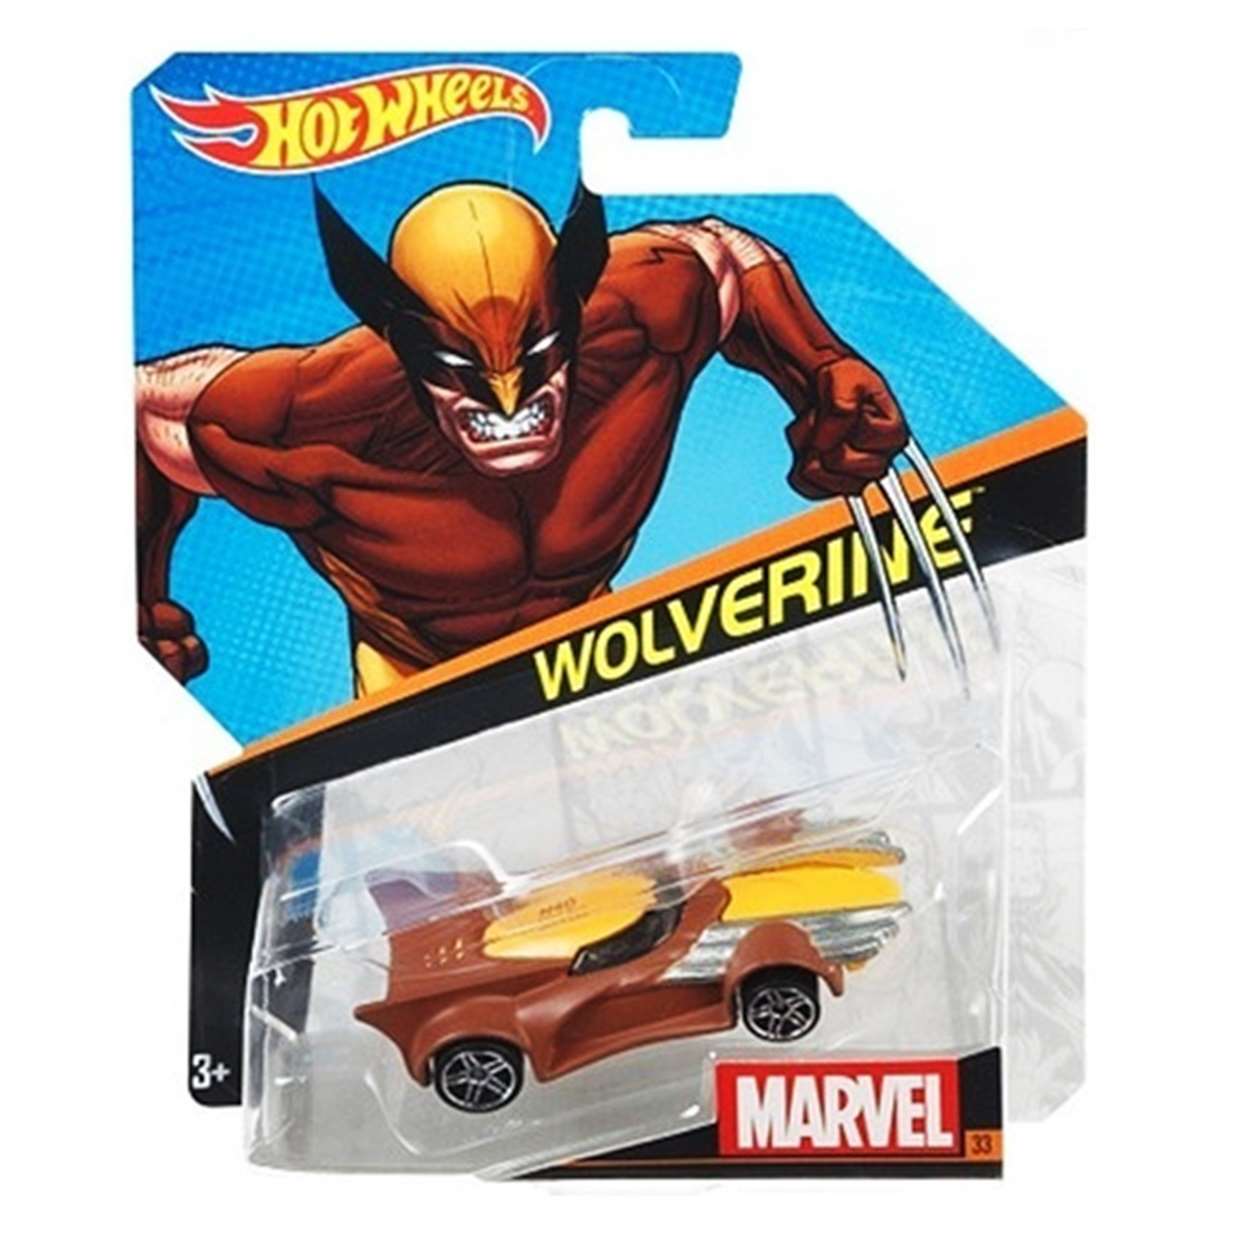 Wolverine Brown Vehicle #33 Hot Wheels Character Car